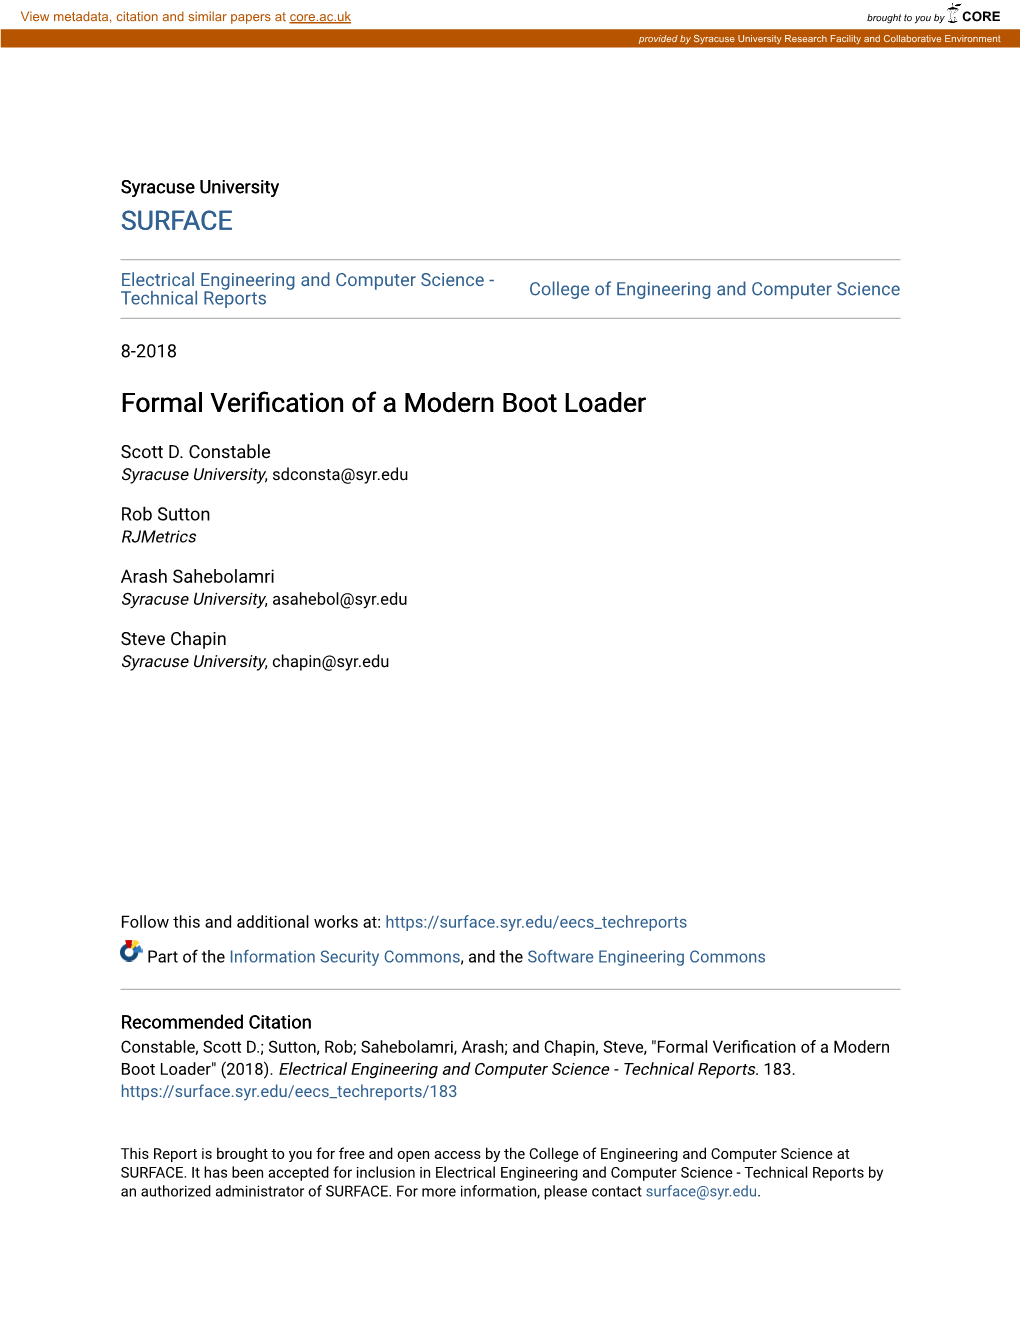 Formal Verification of a Modern Boot Loader